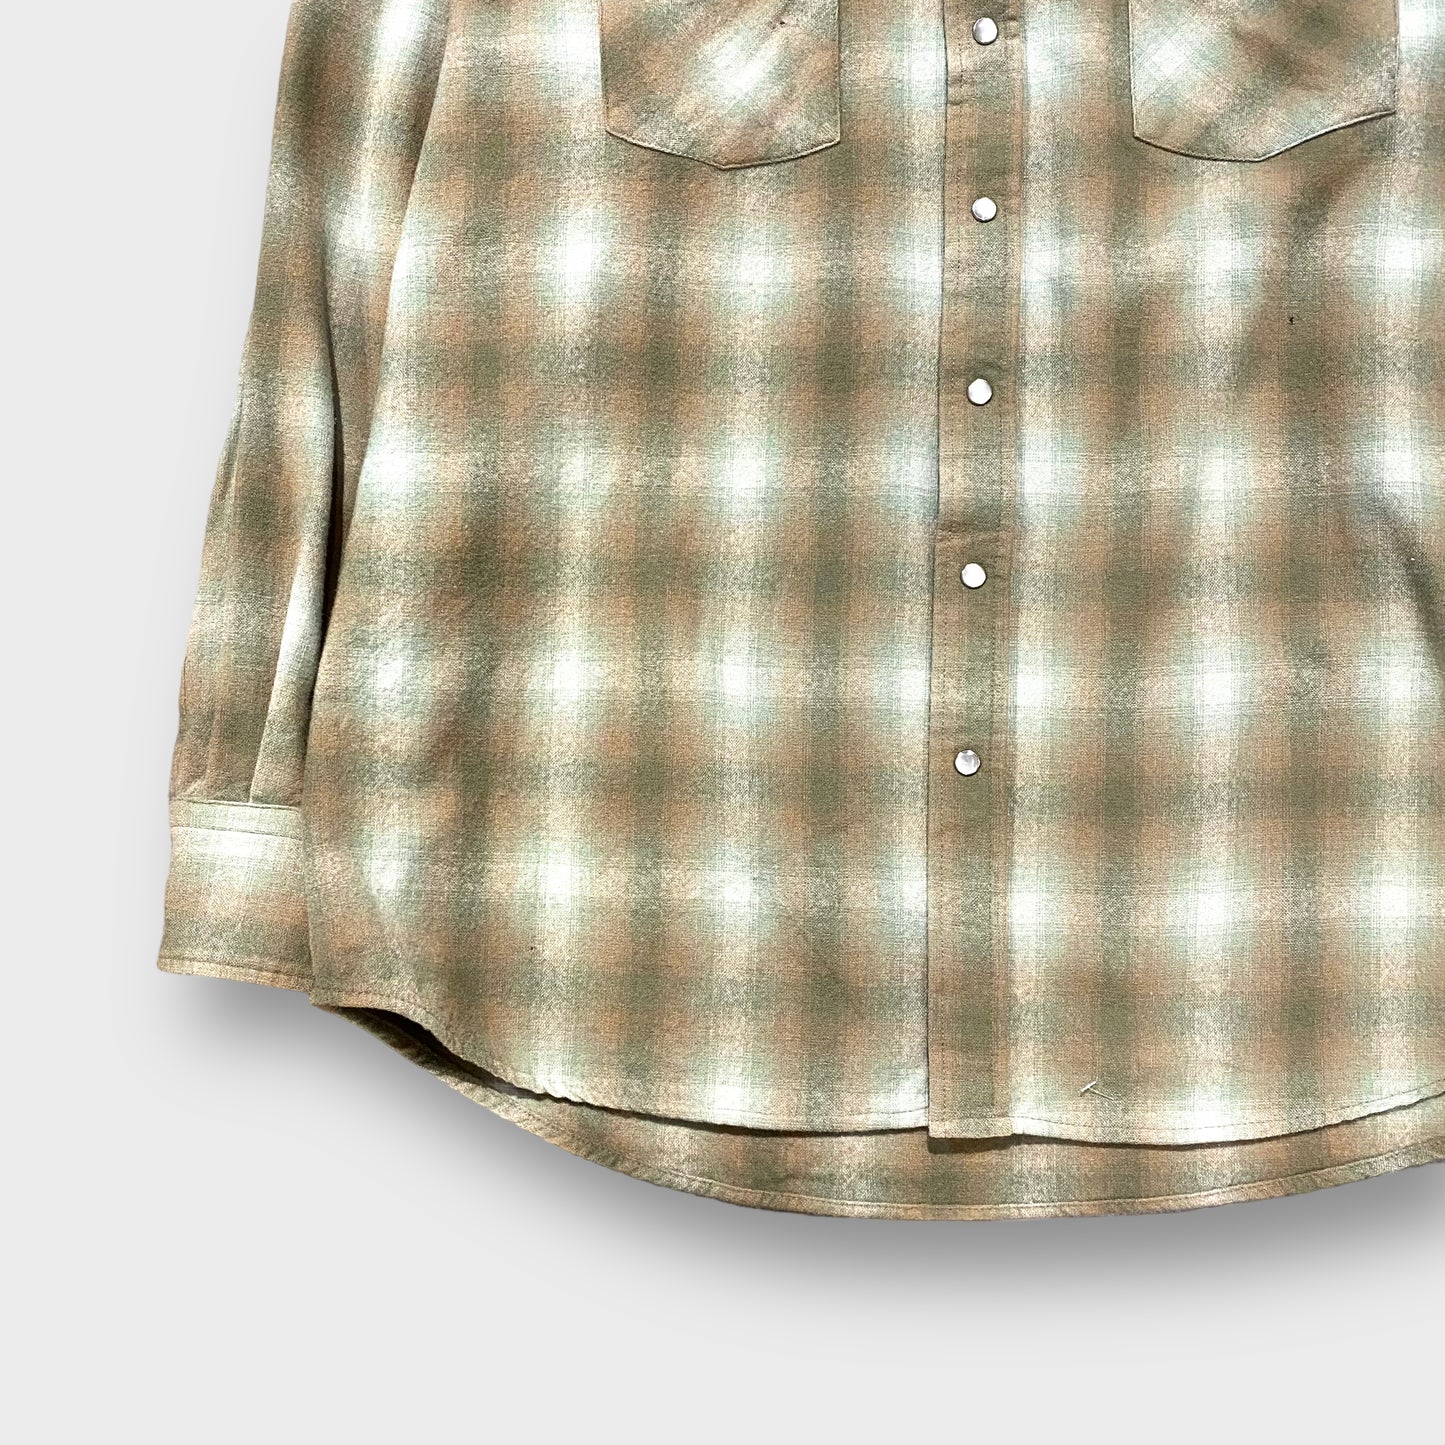 90's "PENDLETON" Ombre check pattern western shirt